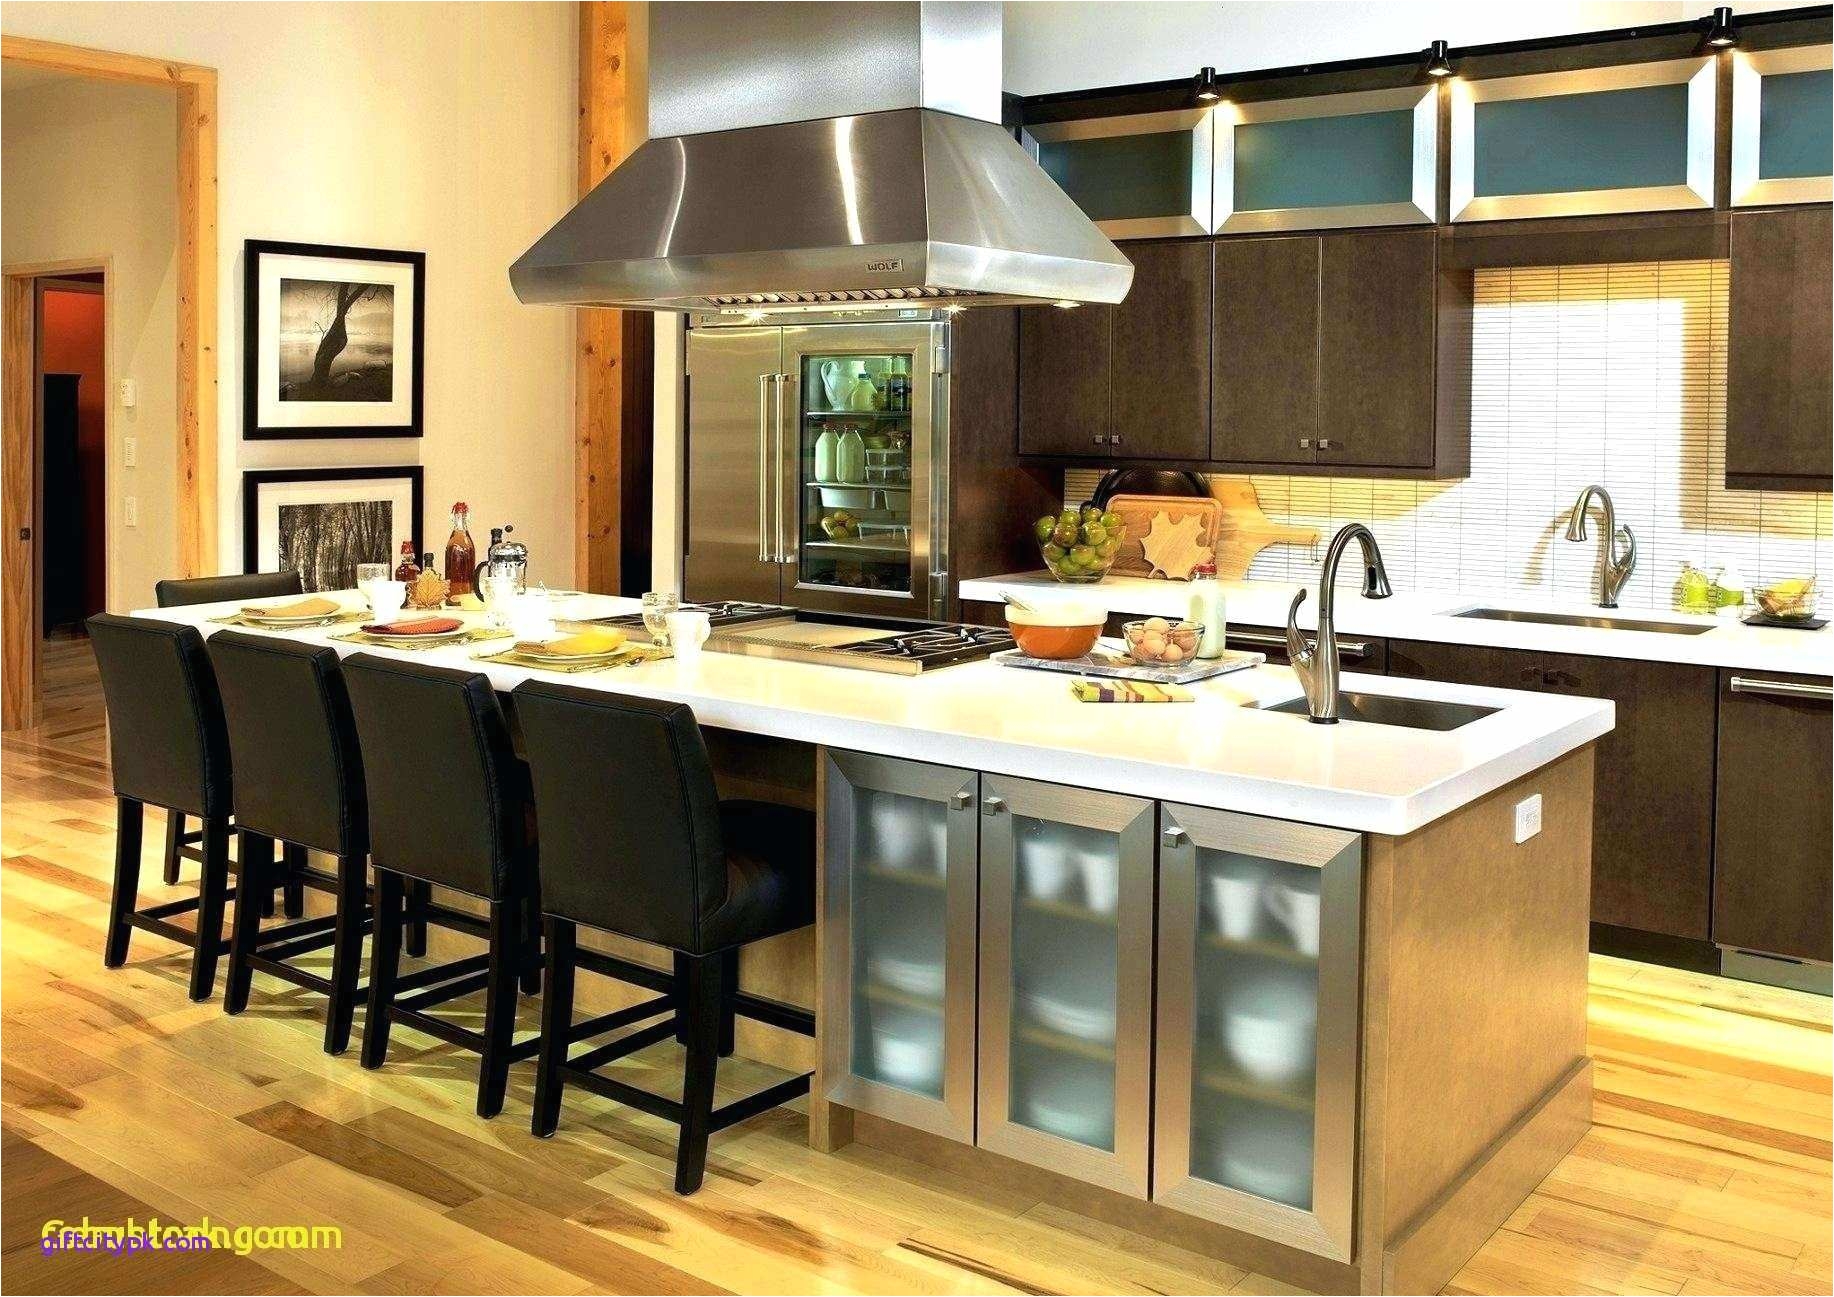 lighting kitchen island new kitchen island designs new slbss8h sink dishwasher bo 1958i 0d the